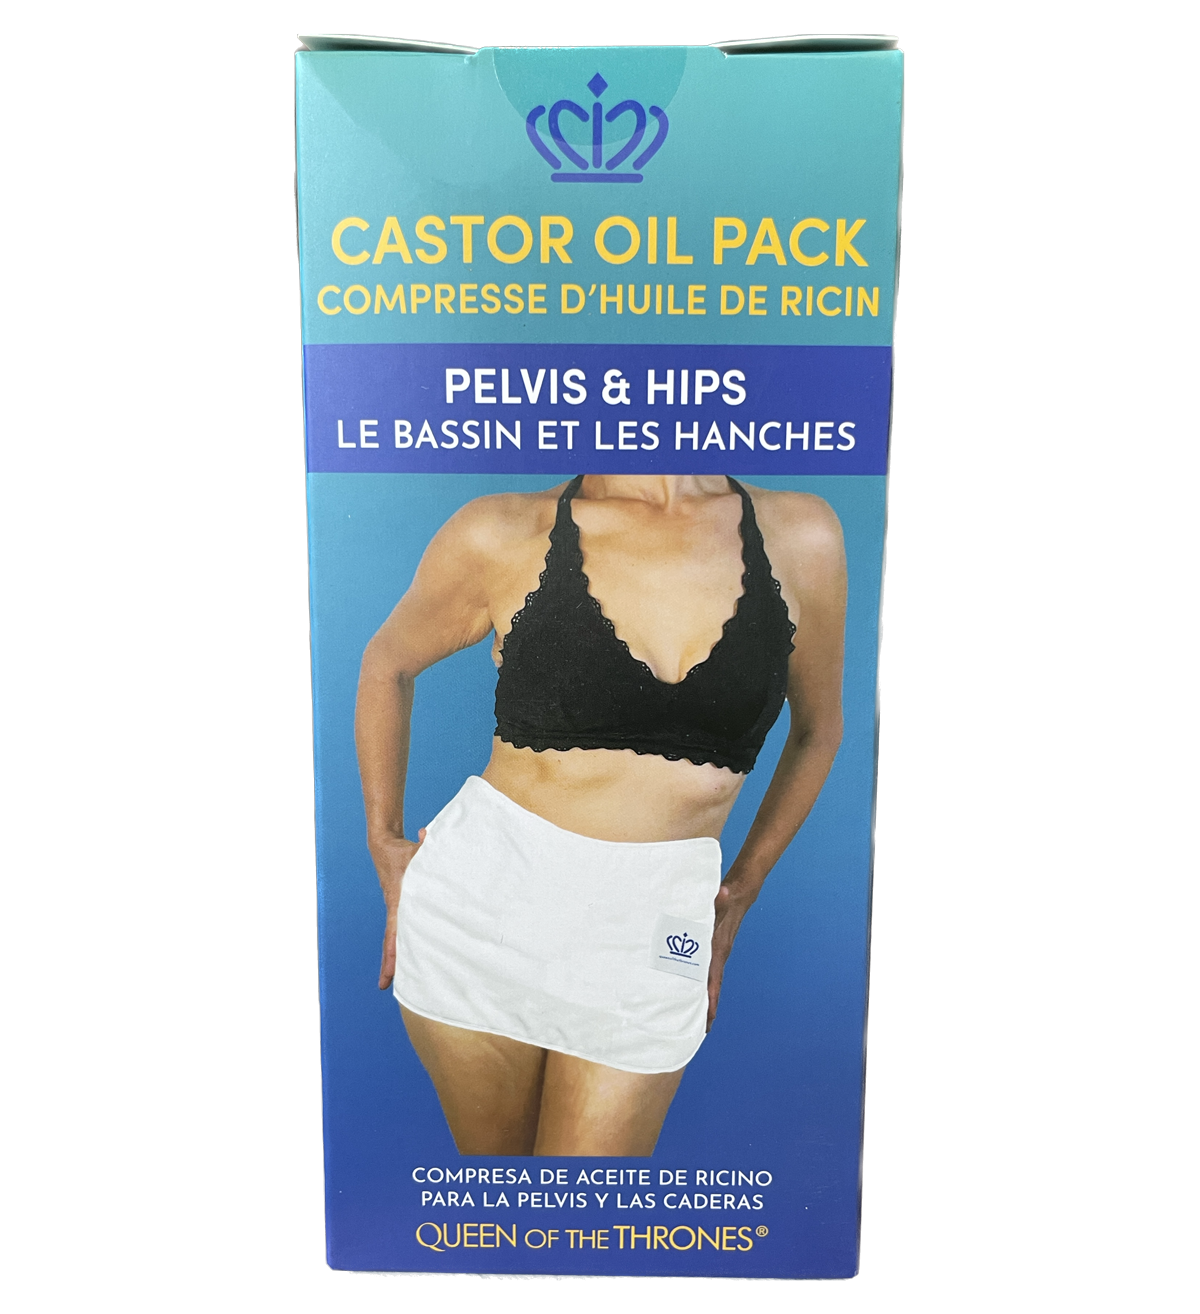 Queen of the Thrones Original Organic Pelvis & Hips Castor Oil Pack